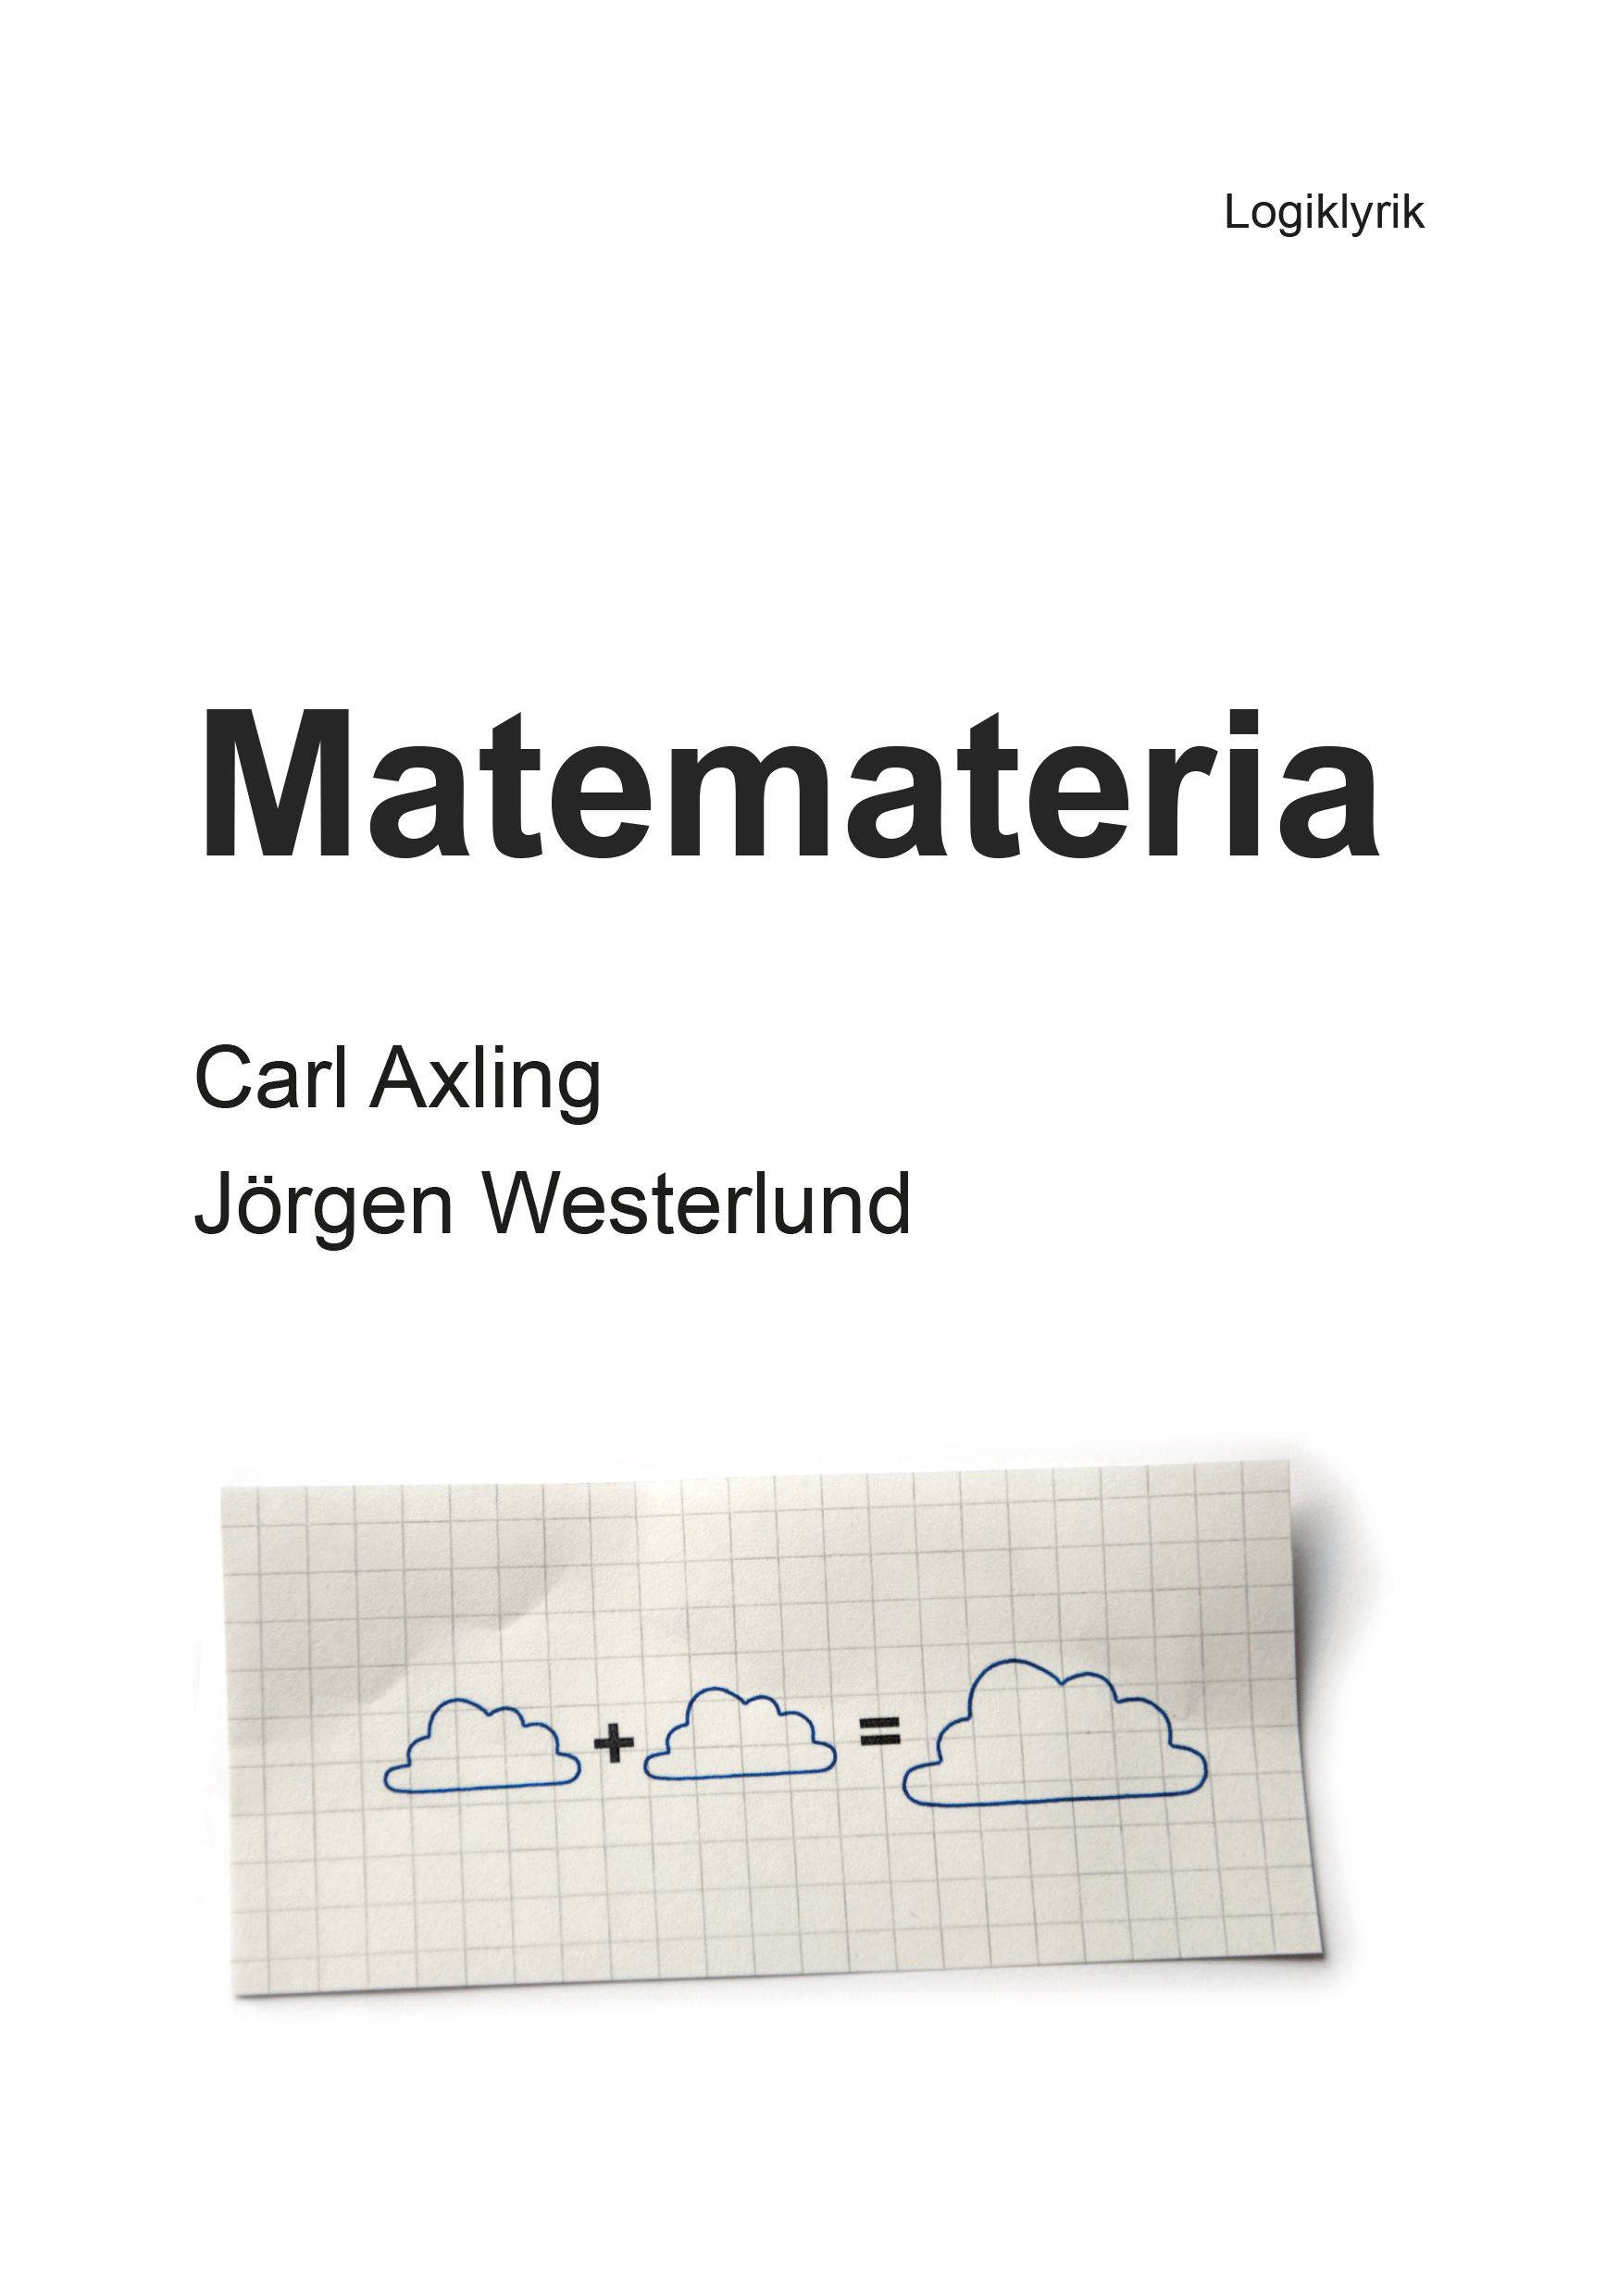 Matemateria, eBook by Carl Axling, Jörgen Westerlund